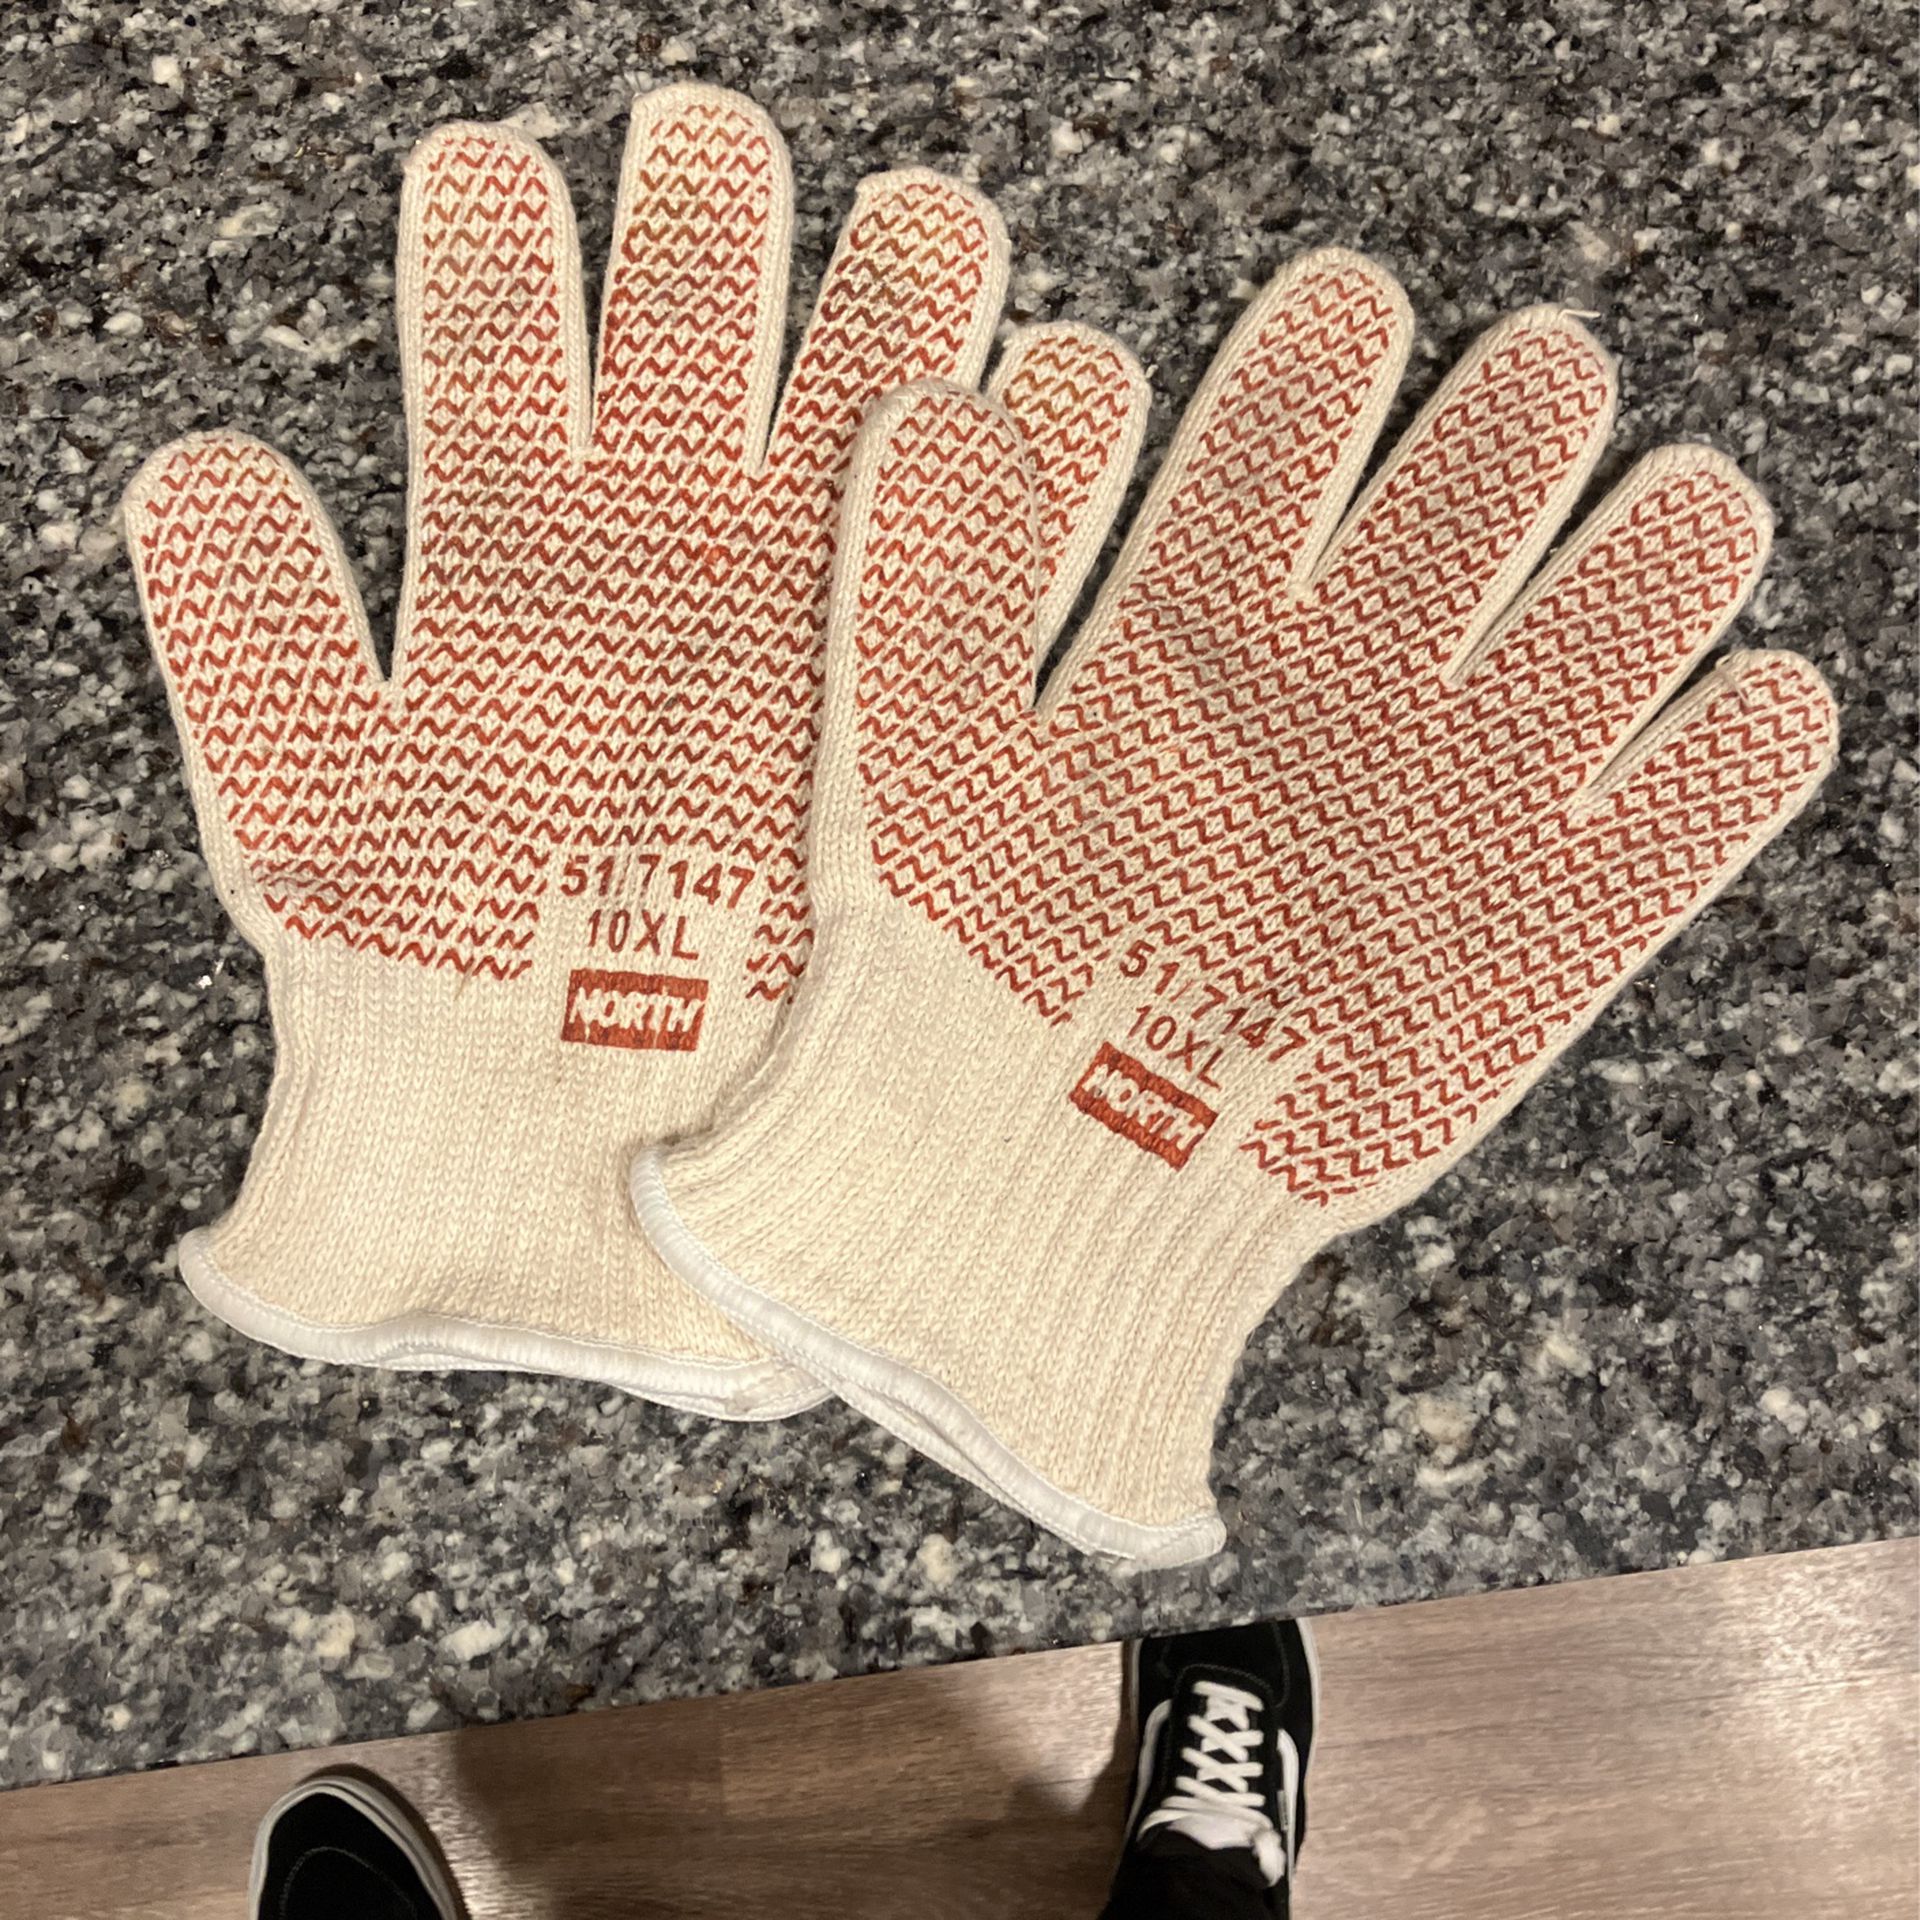 Honeywell North Gloves